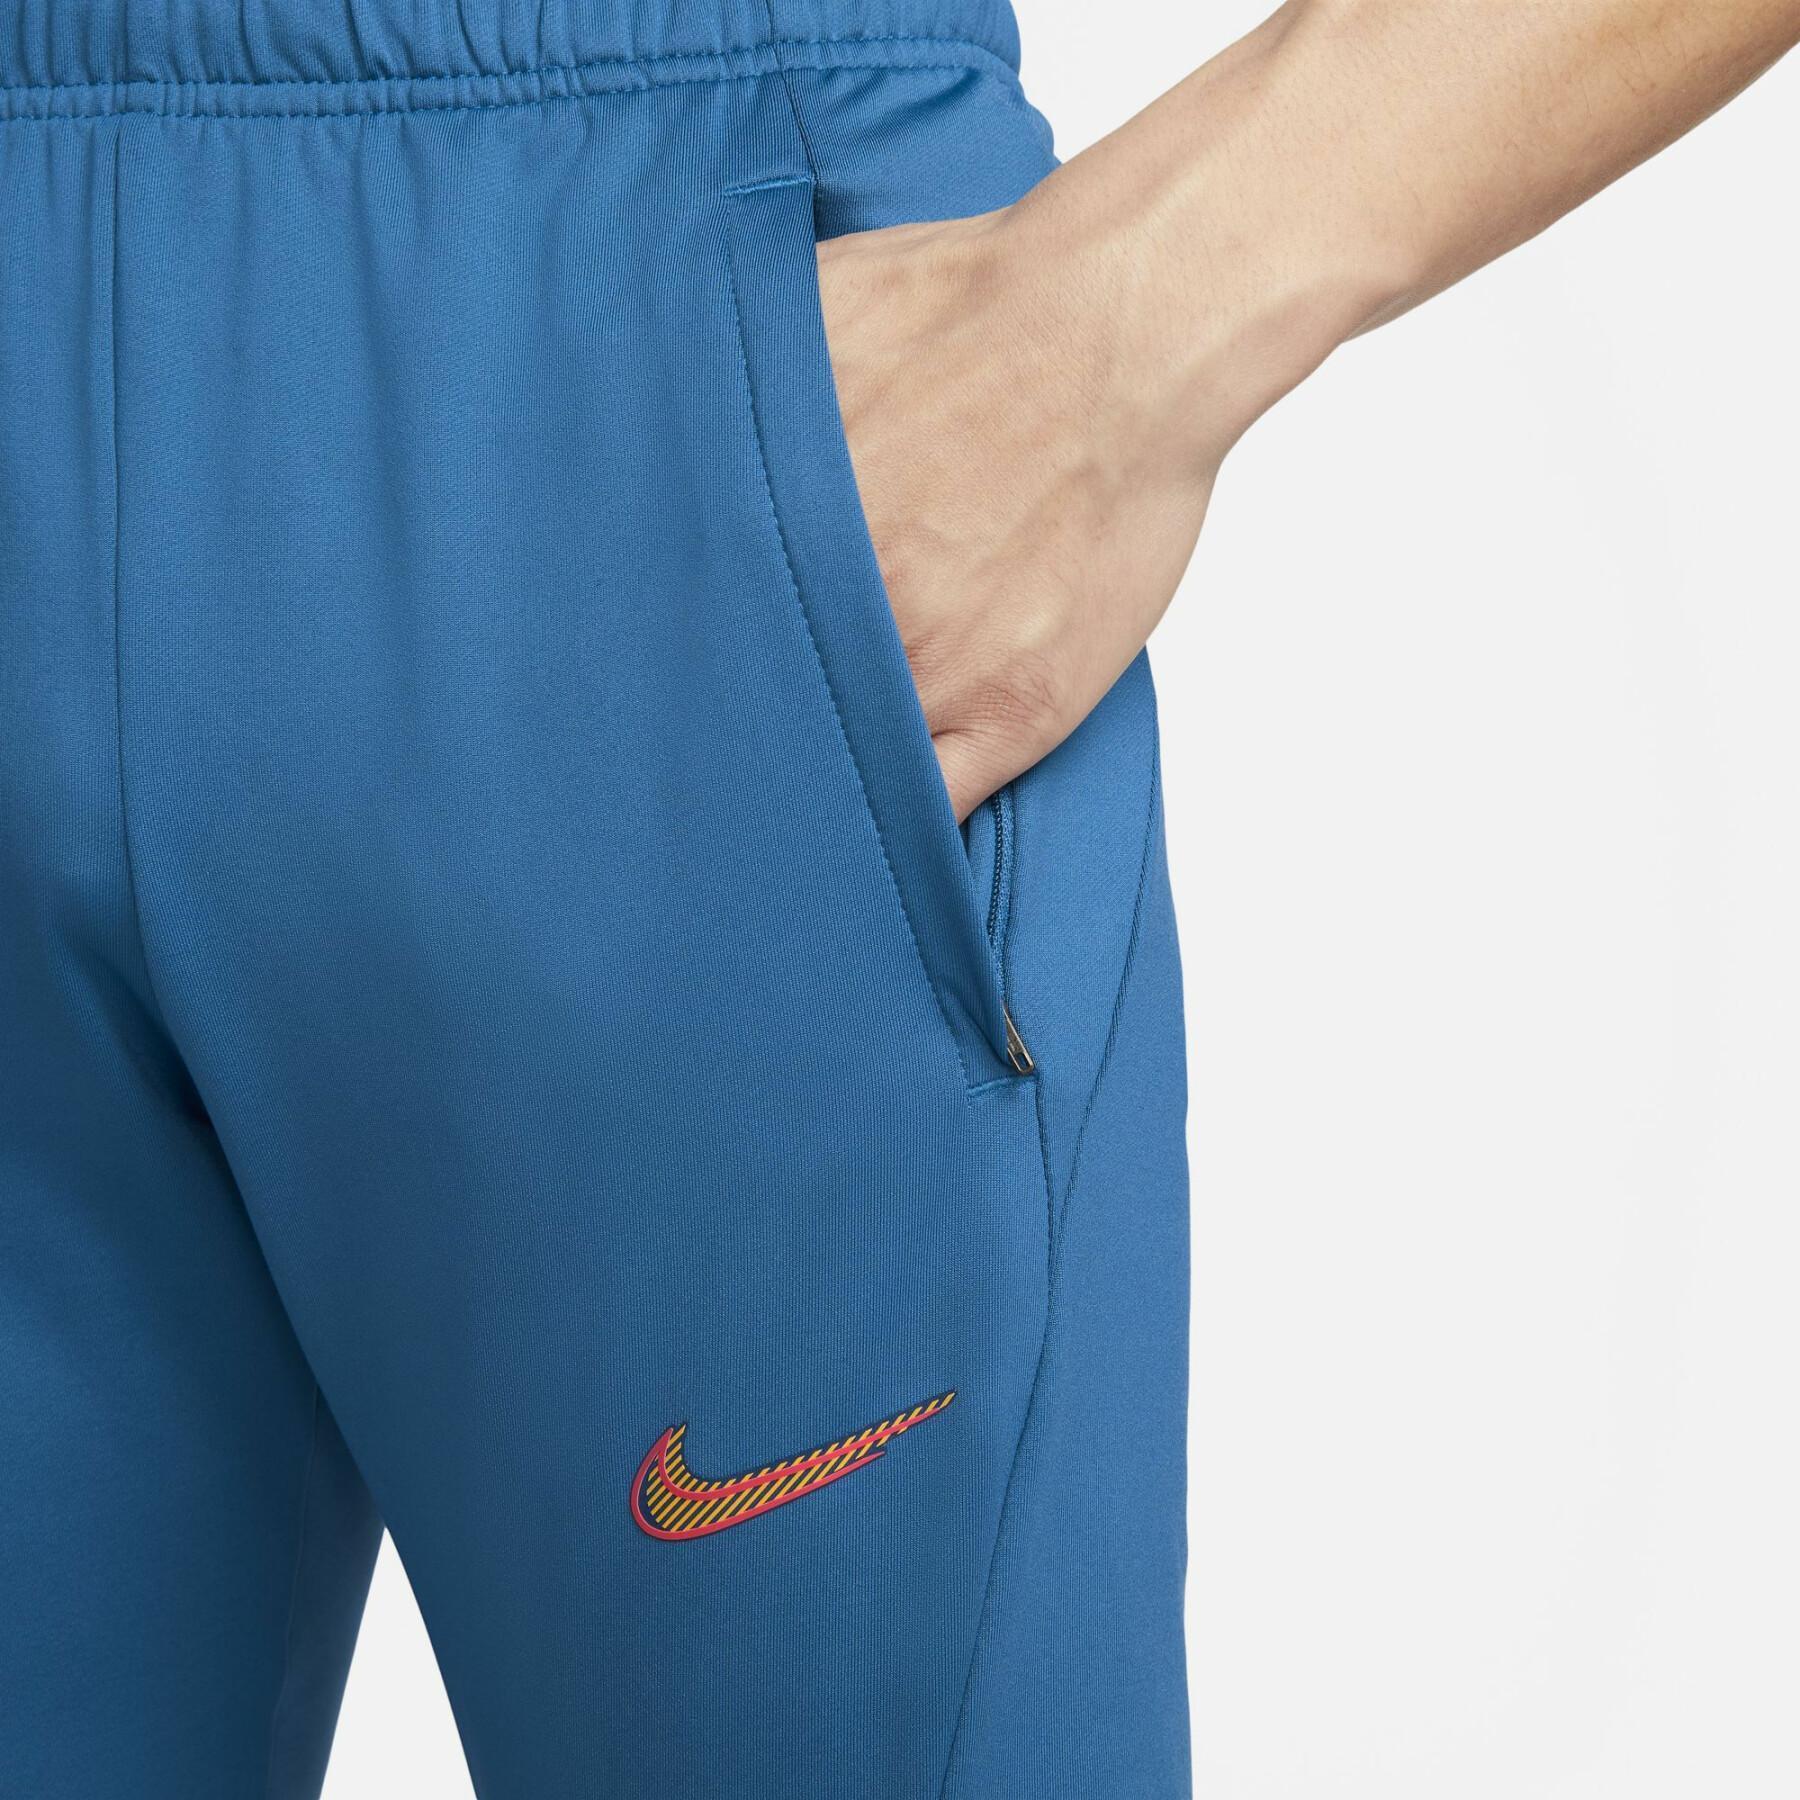 Pantaloni Nike Dri-Fit Strike